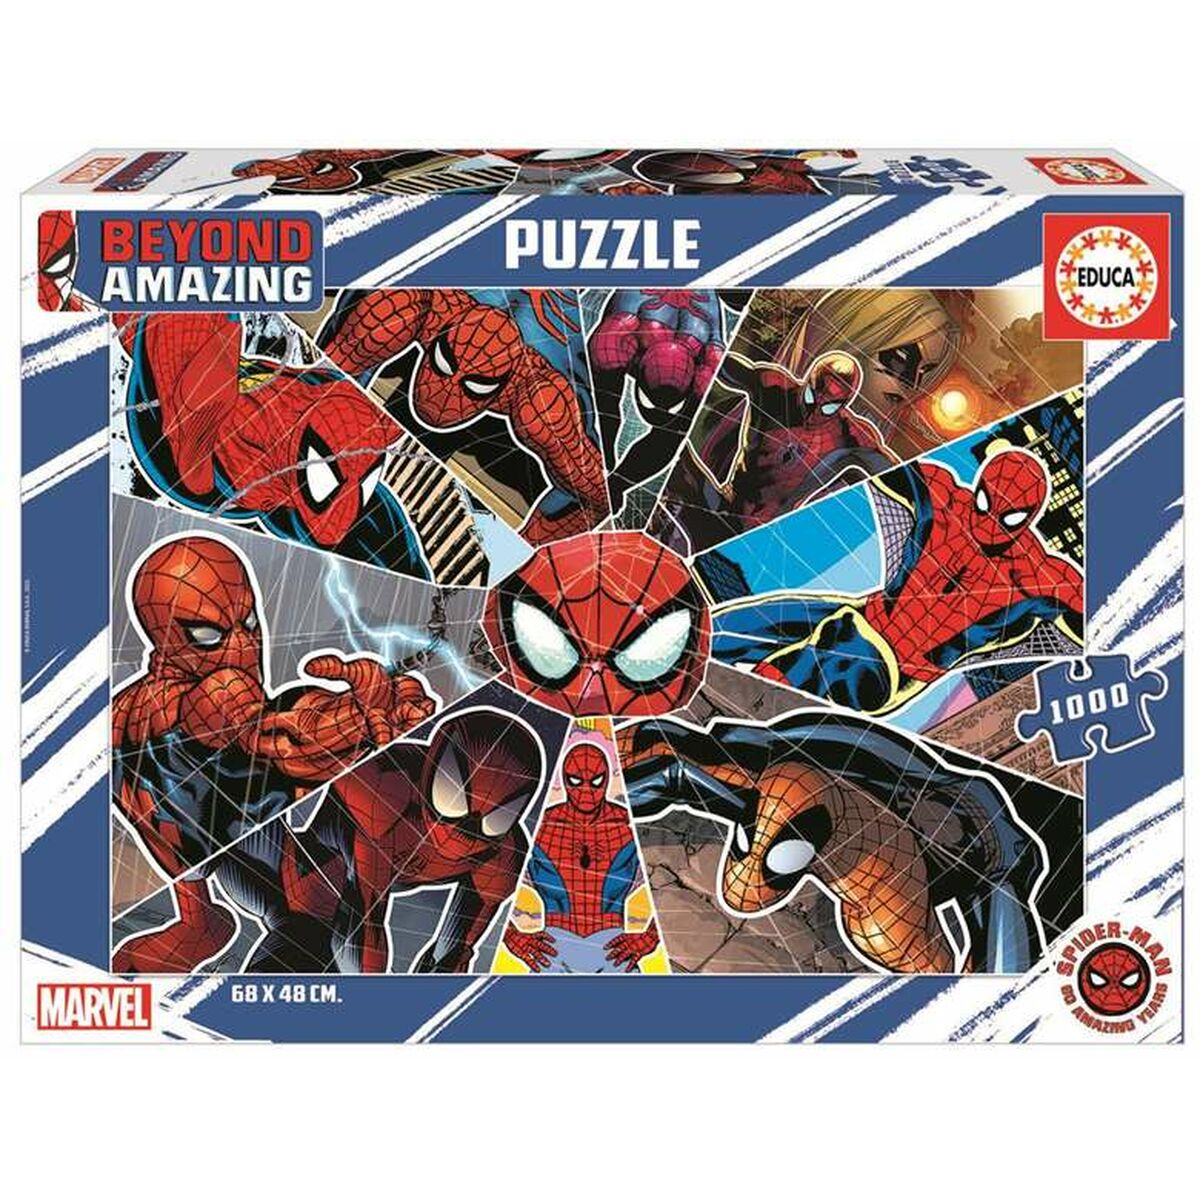 Puzzle Educa Spiderman Beyond Amazing 1000 Pezzi